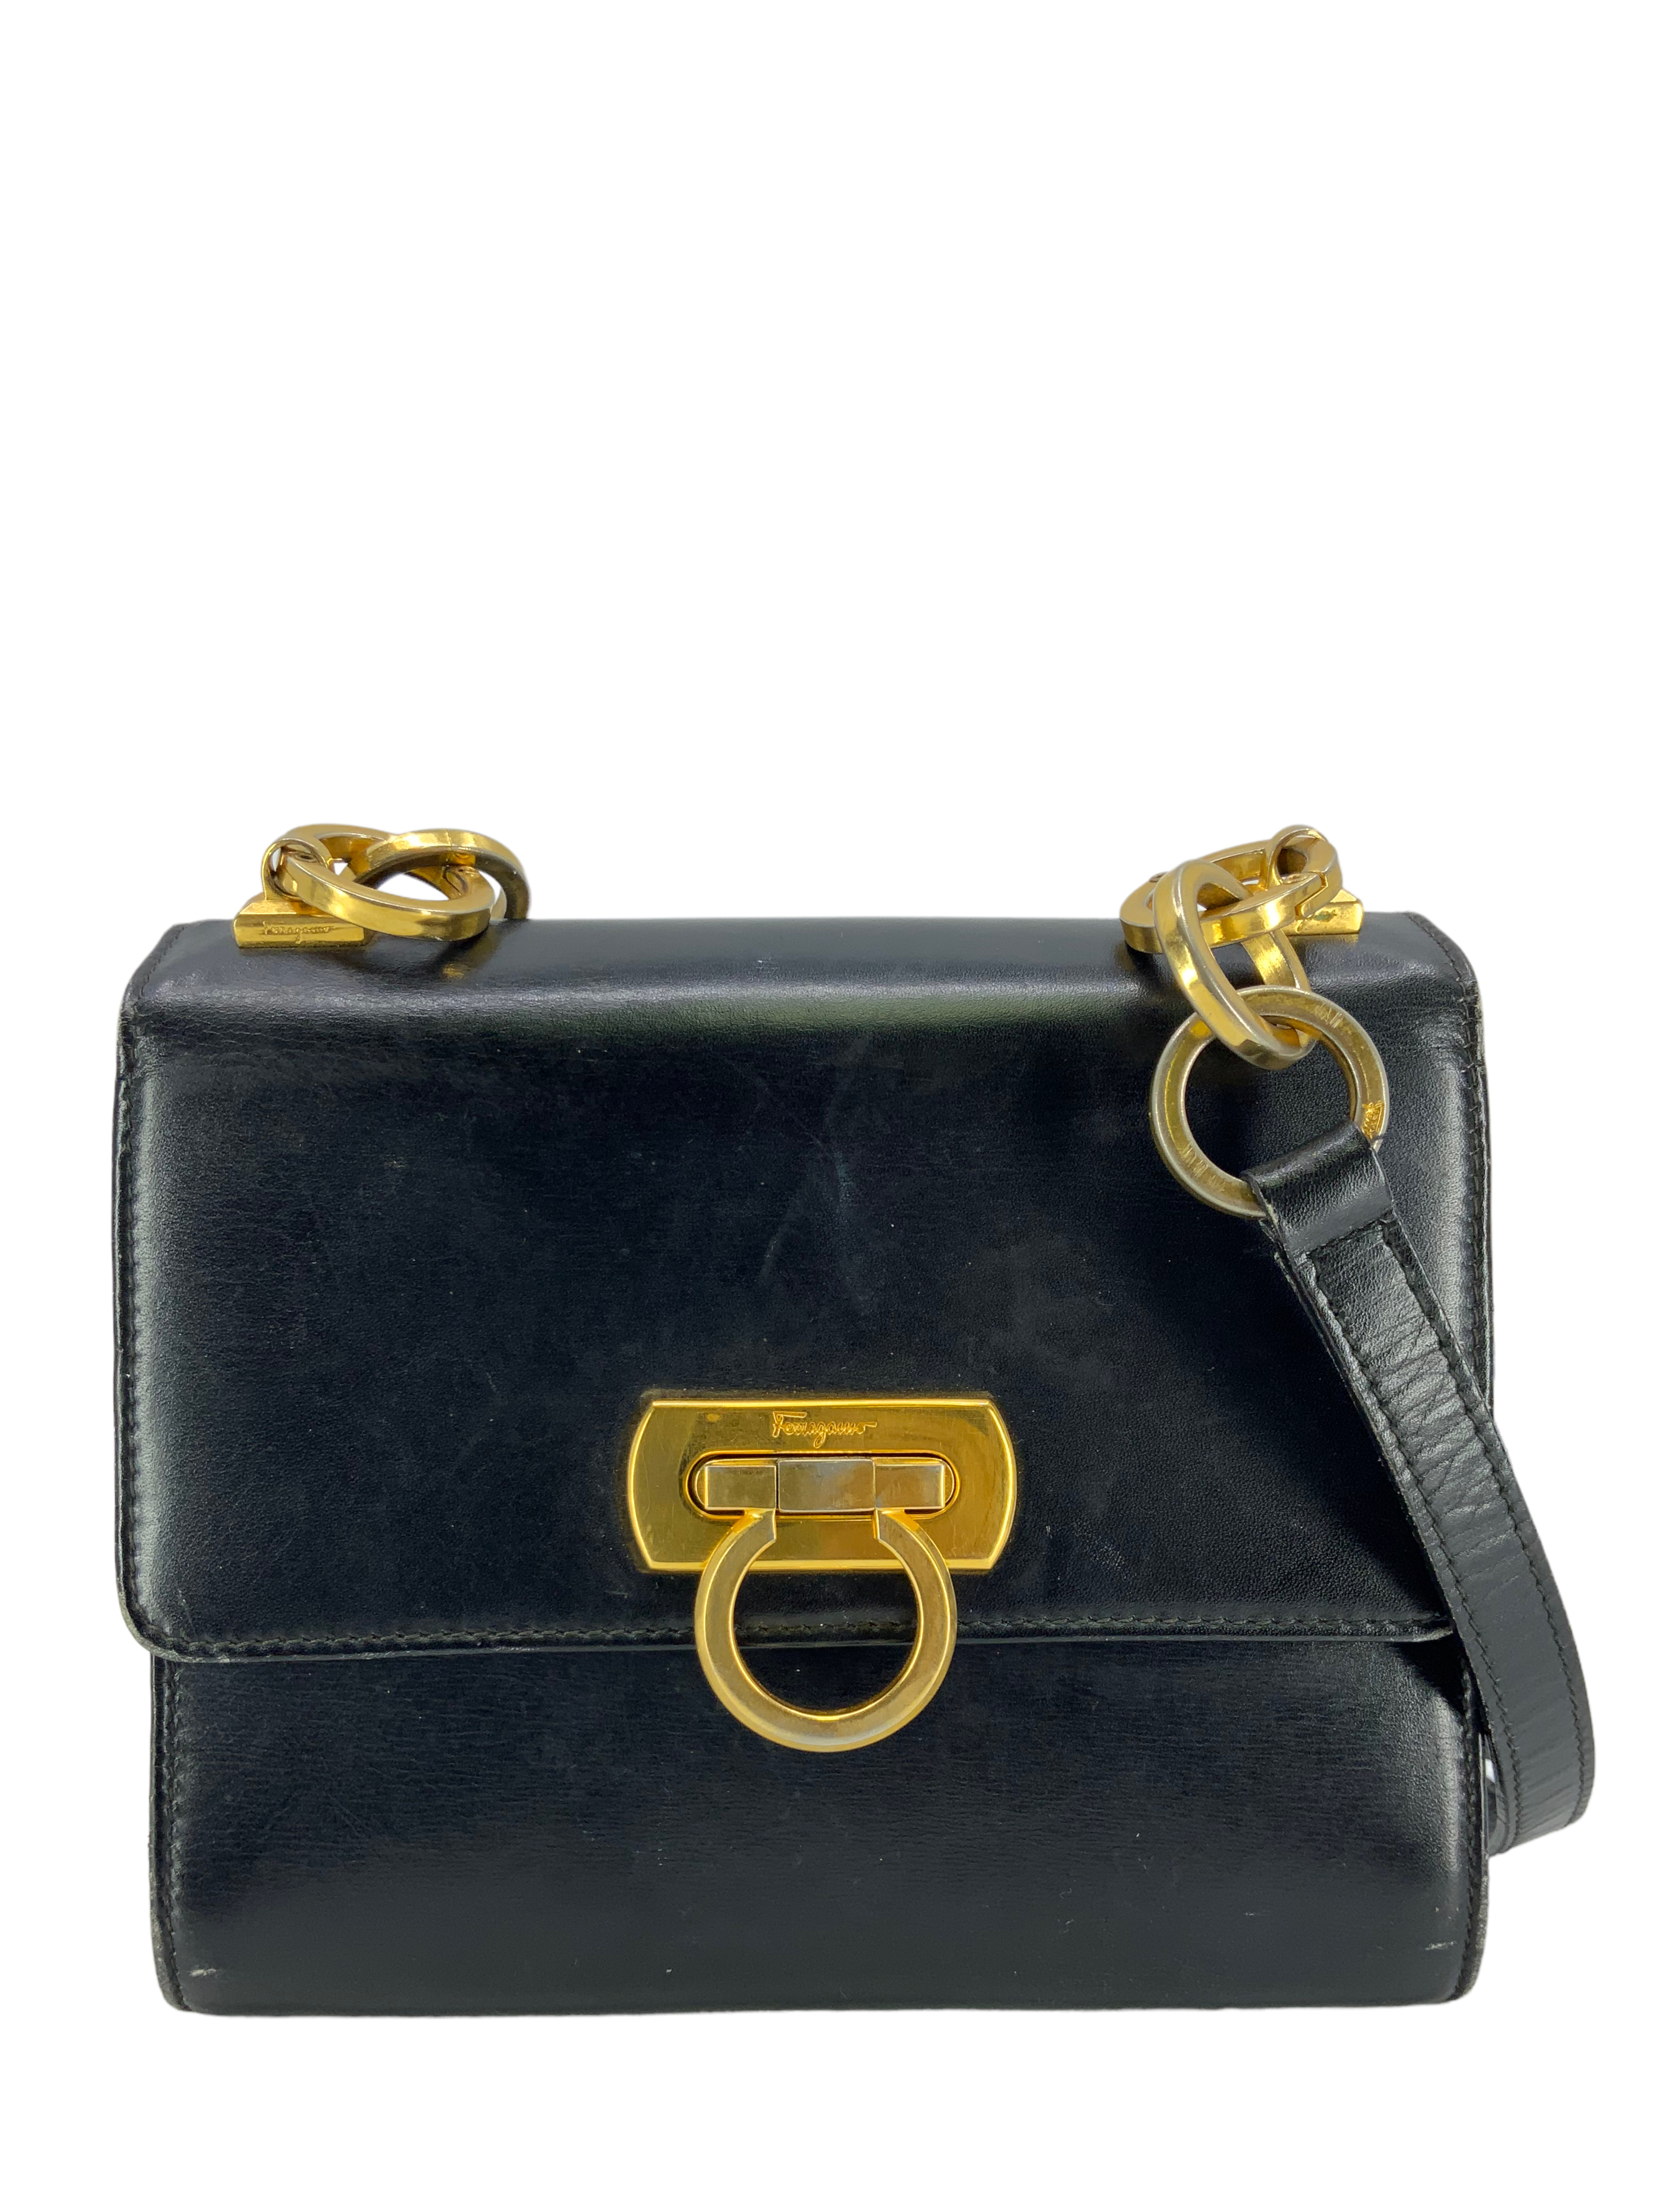 Salvatore Ferragamo Vintage Gancini Leather Flap Crossbody Bag